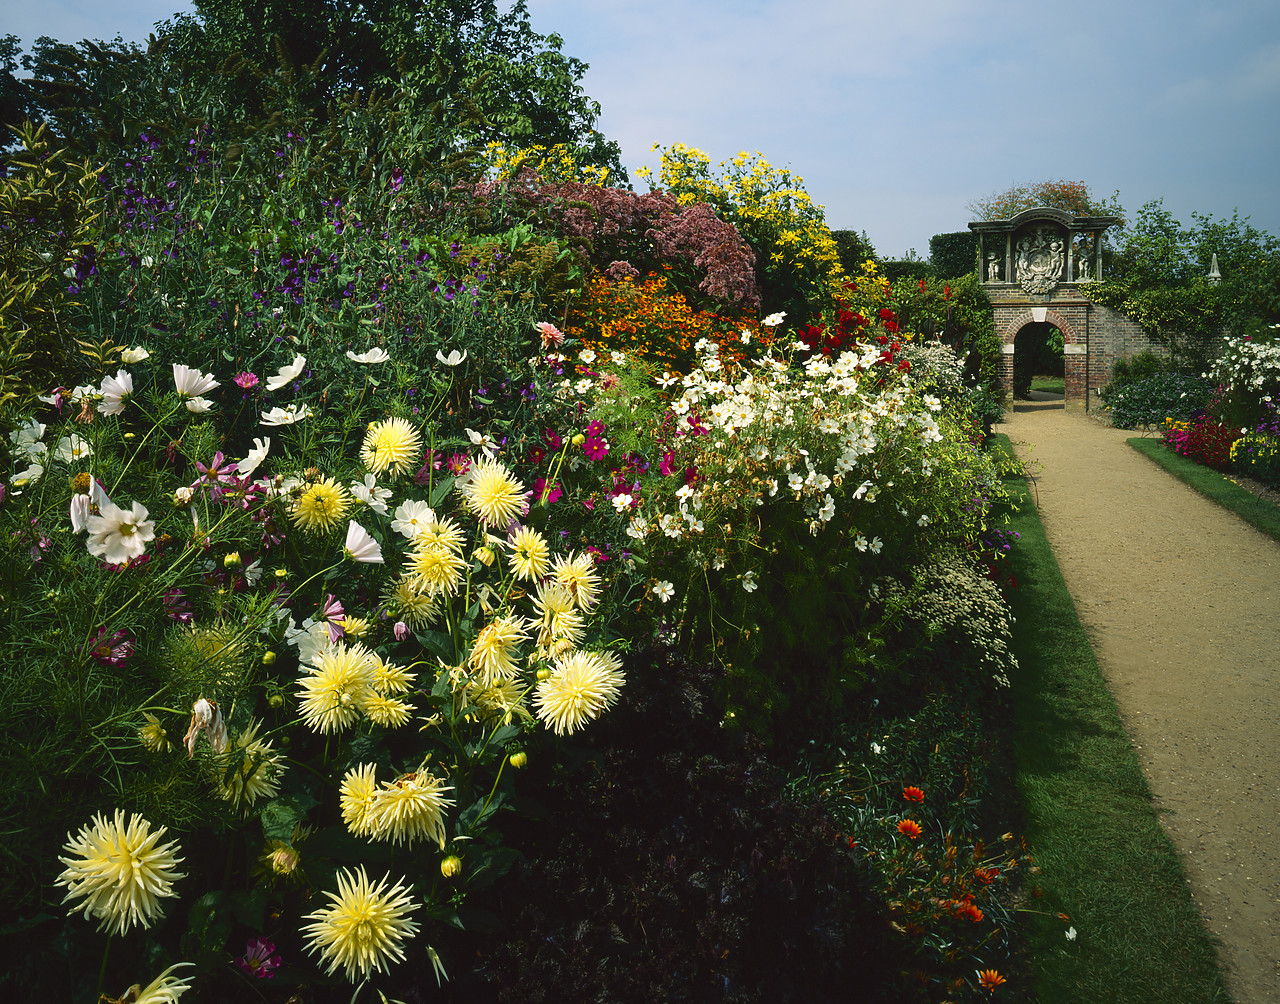 #934418-1 - Nymans Gardens, Handcross, West Sussex, England